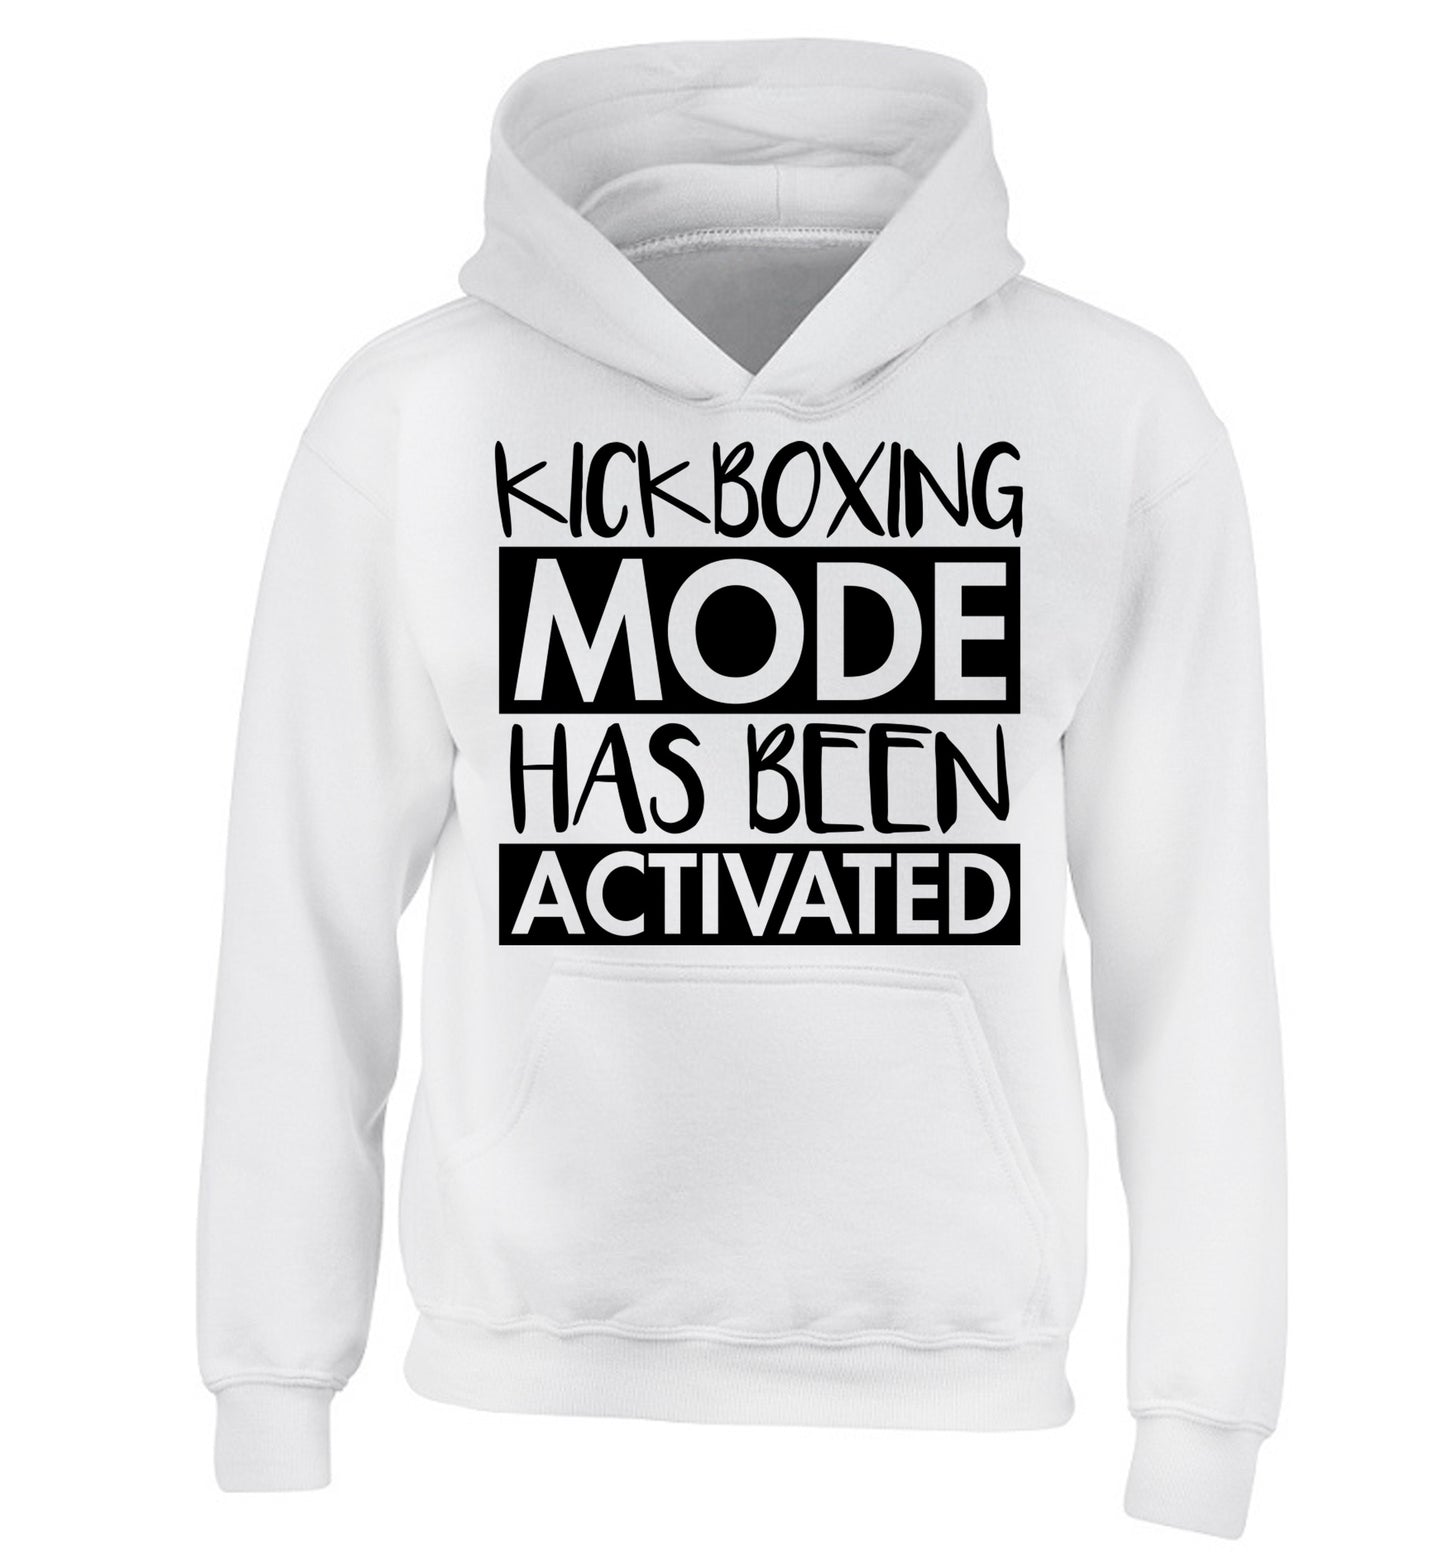 Kickboxing mode activated children's white hoodie 12-14 Years